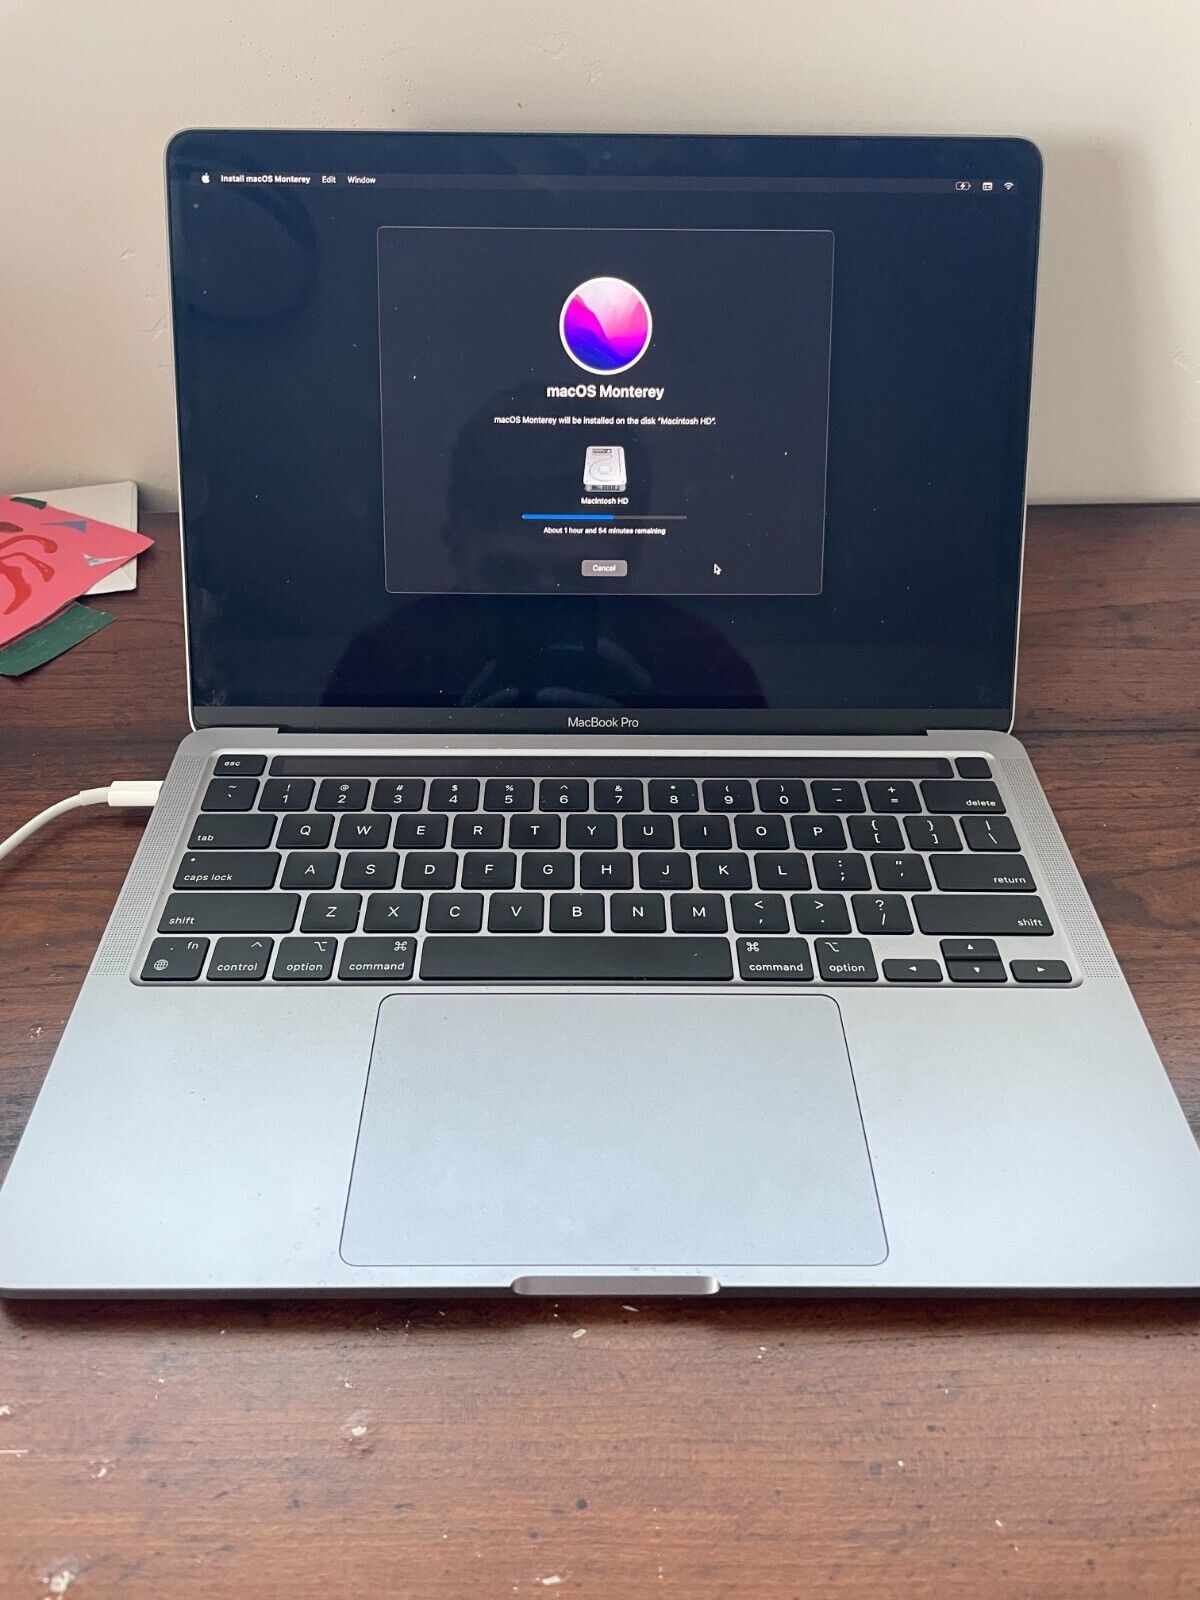 Apple MacBook Pro 13in (256GB SSD, M1, 8GB) Laptop - Space Gray - MYD82LL/A...